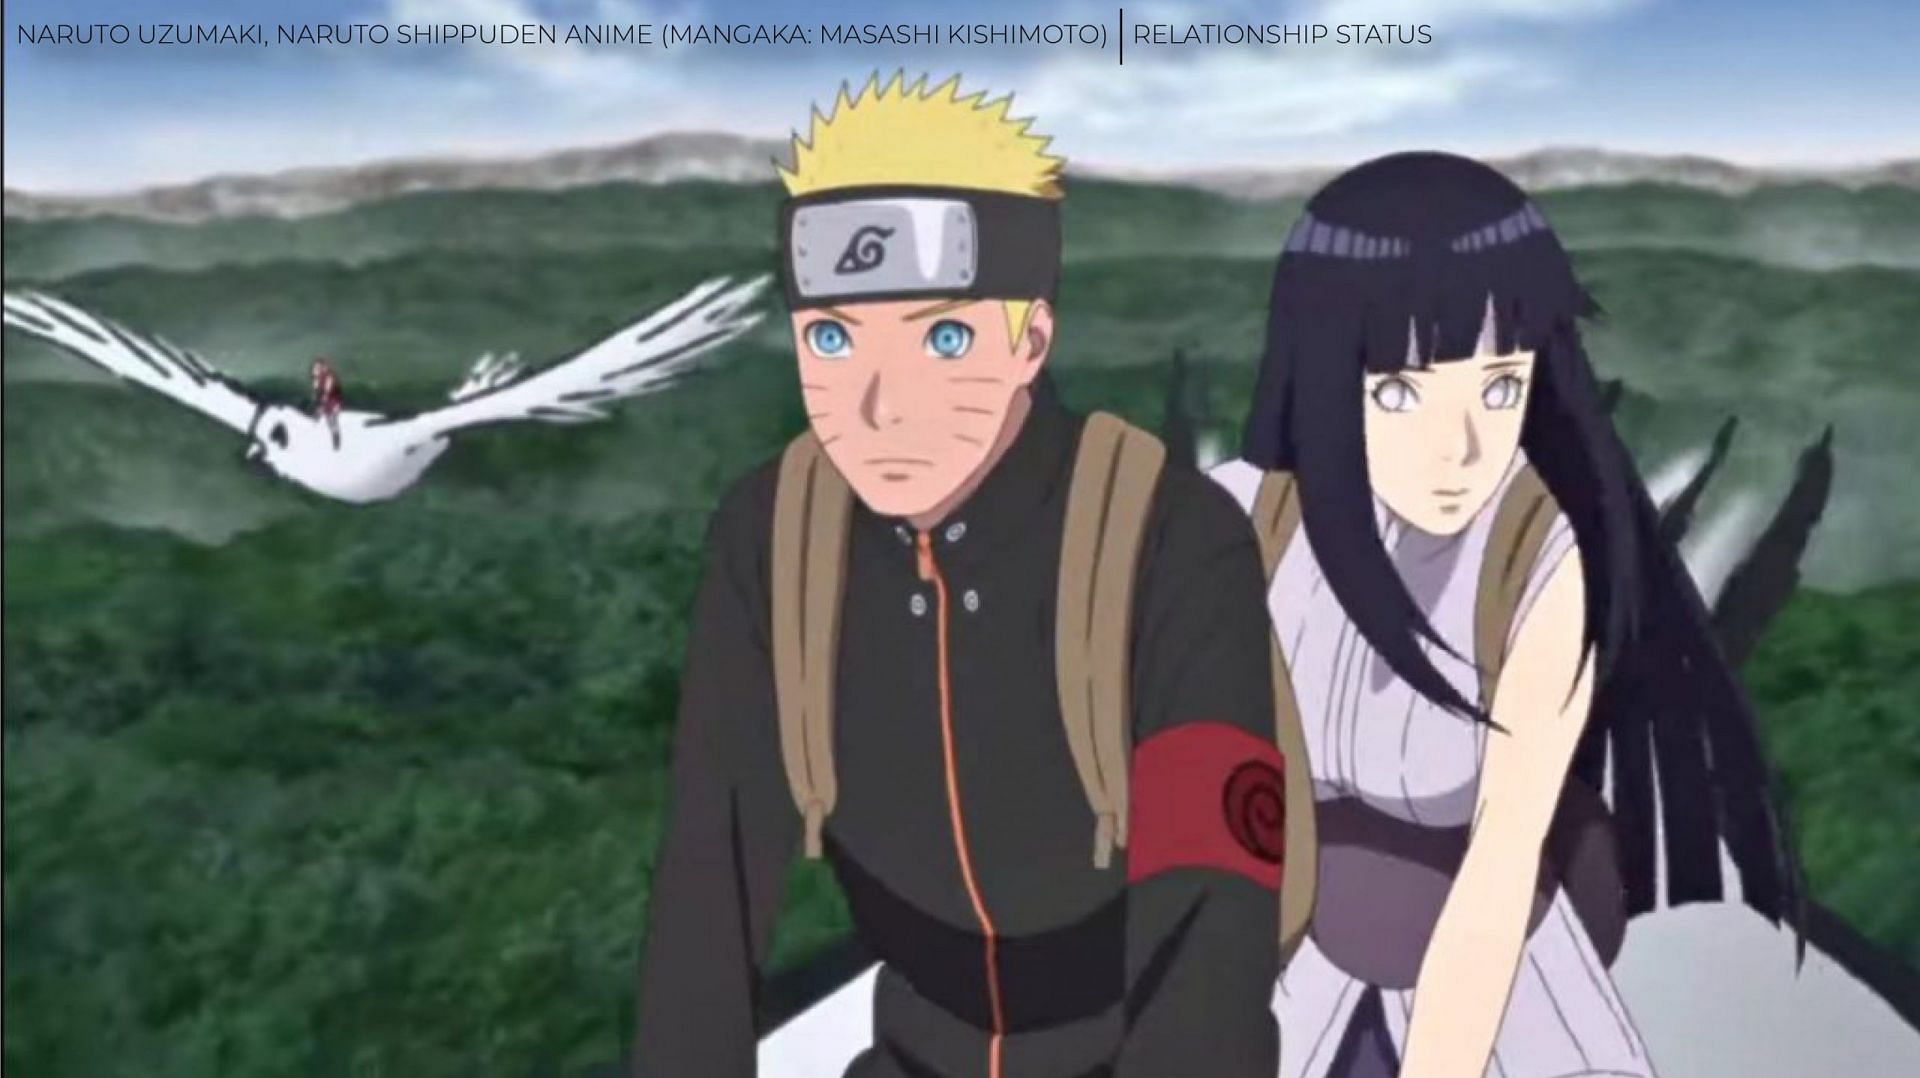 Naruto and Hinata (image via Pierrot)